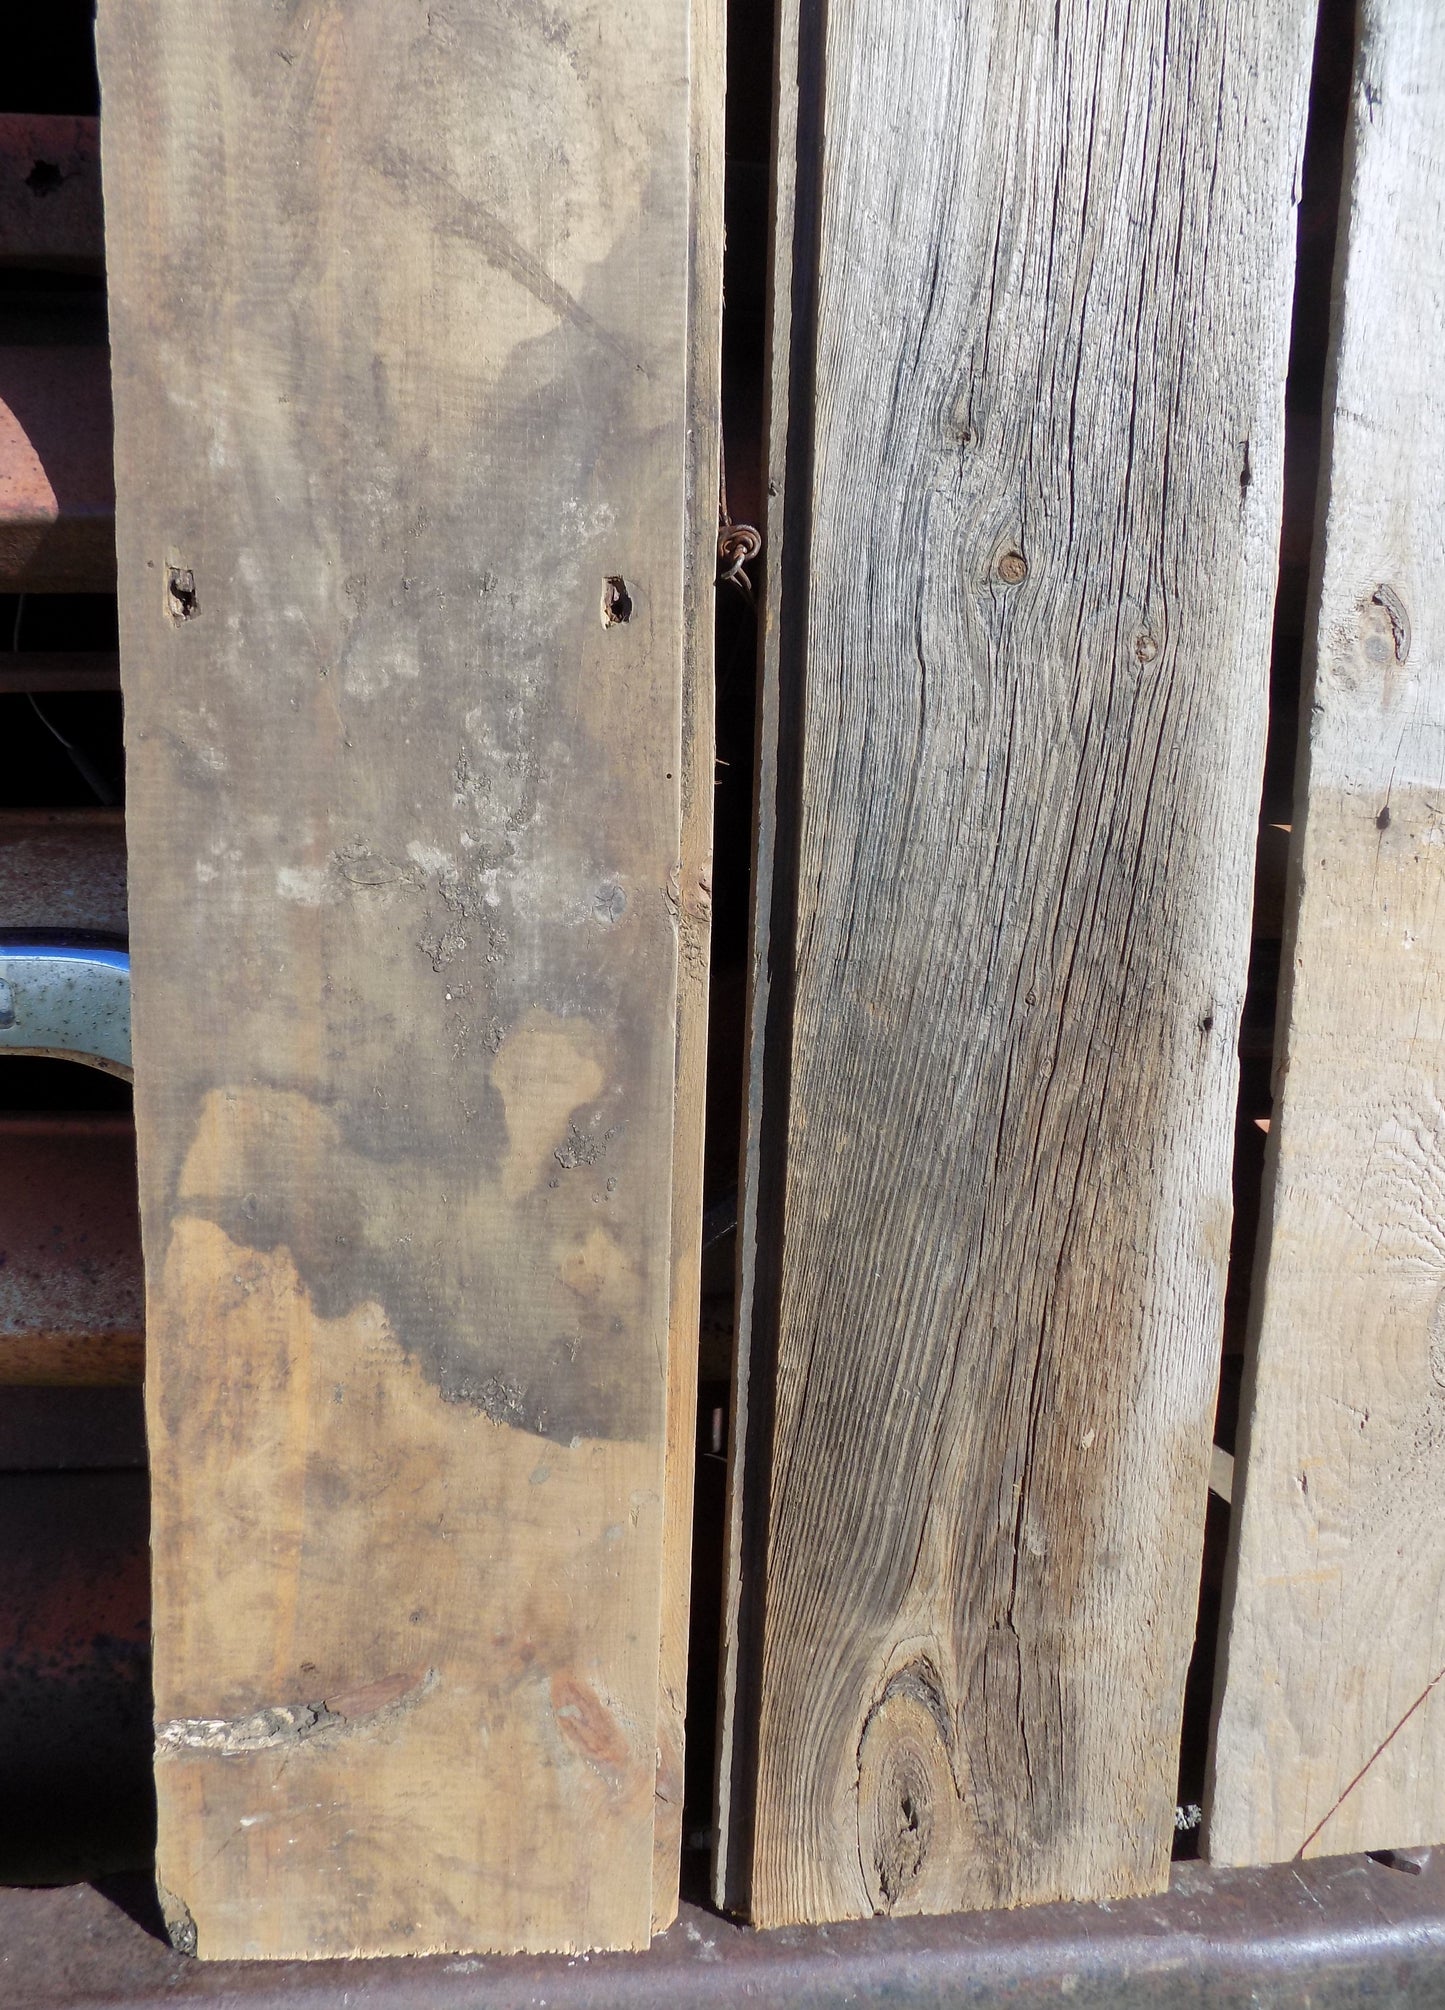 4 Barn Wood Reclaimed Planks, Wall Siding Boards, Rabbet Edge Lumber A48